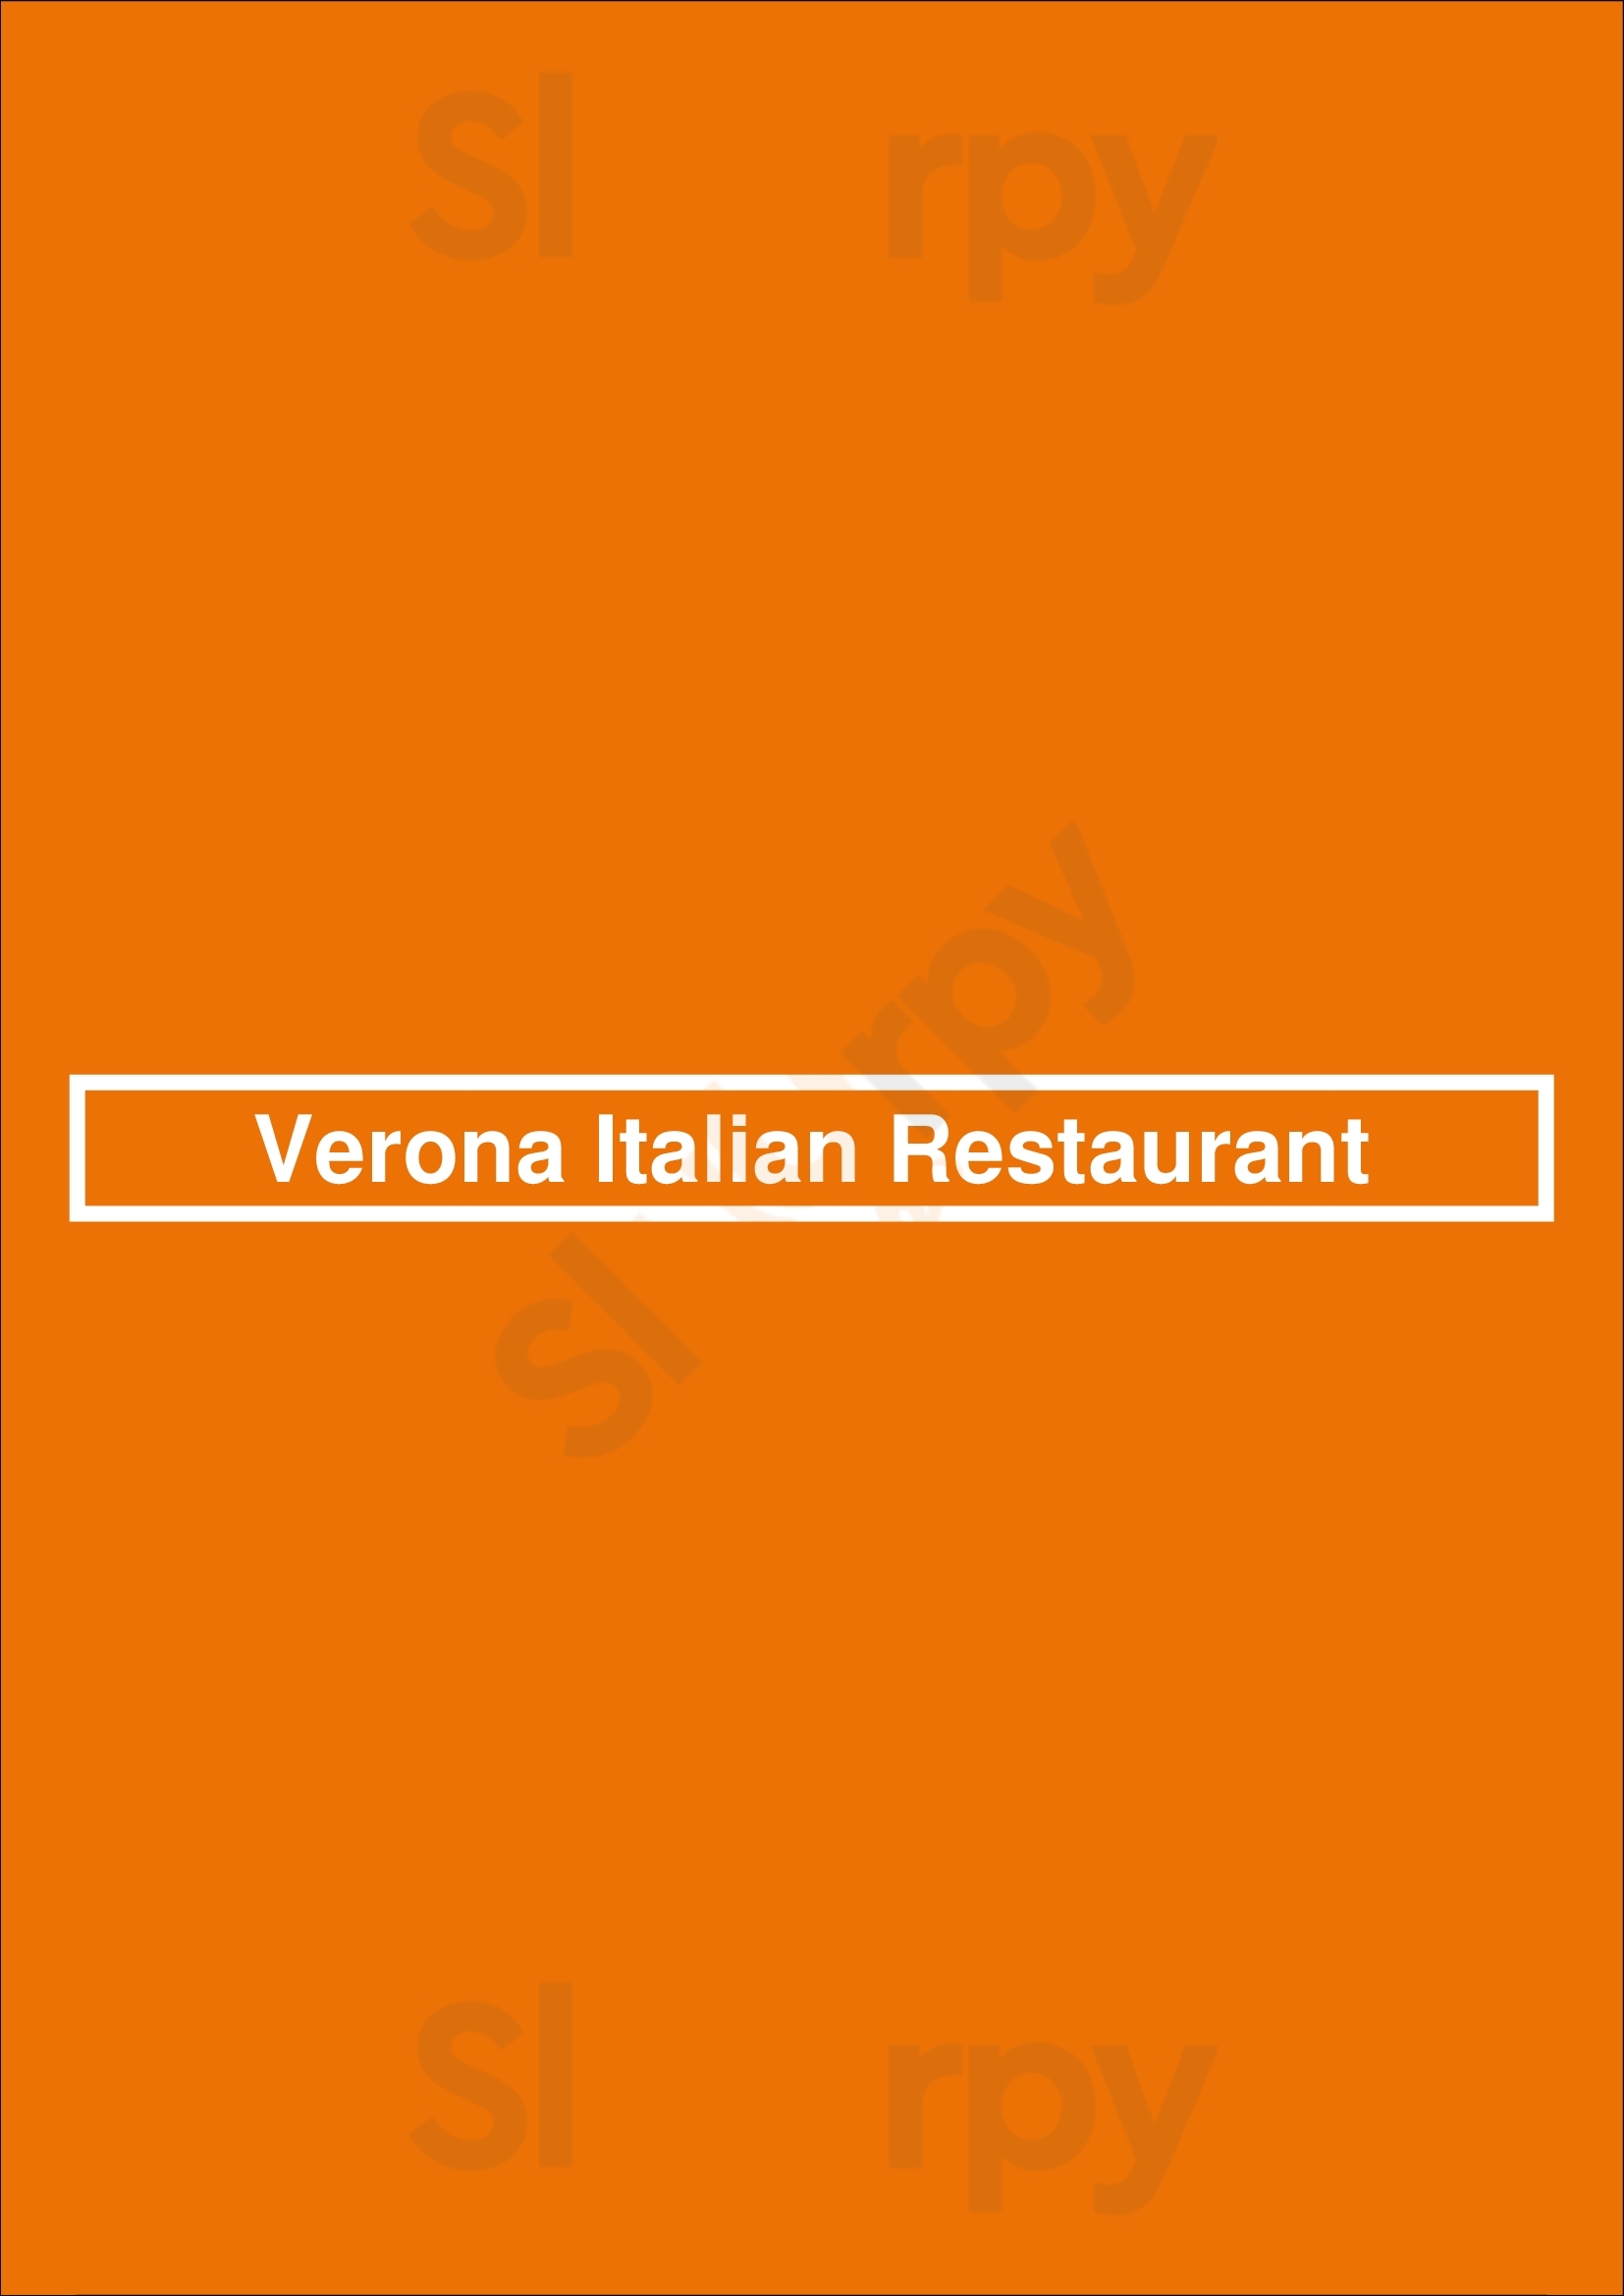 Verona Italian Restaurant Dallas Menu - 1